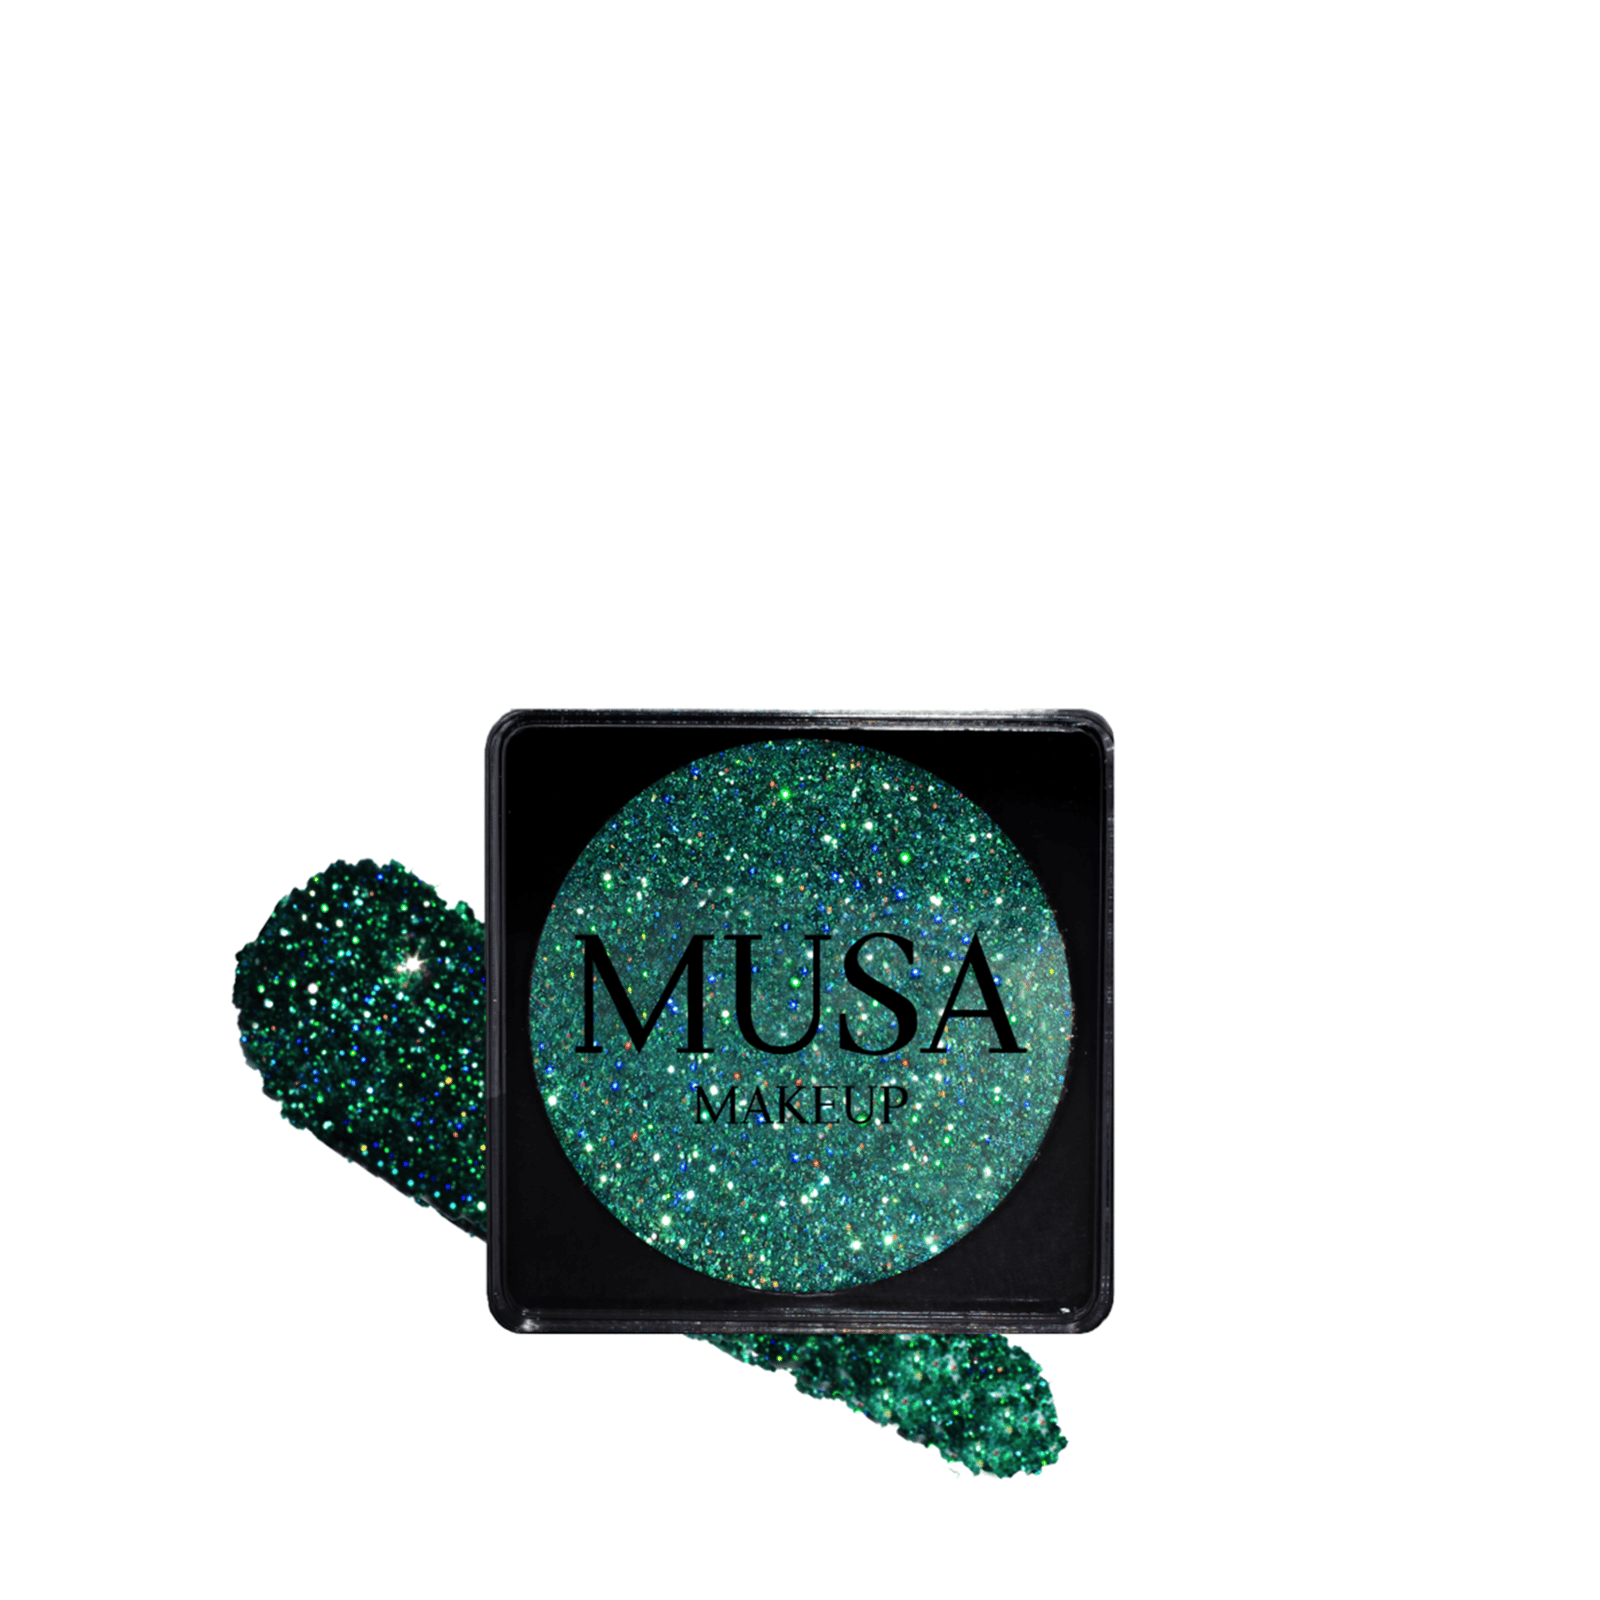 MUSA Makeup Creamy Glitter Seirina 4g (0.14 oz)